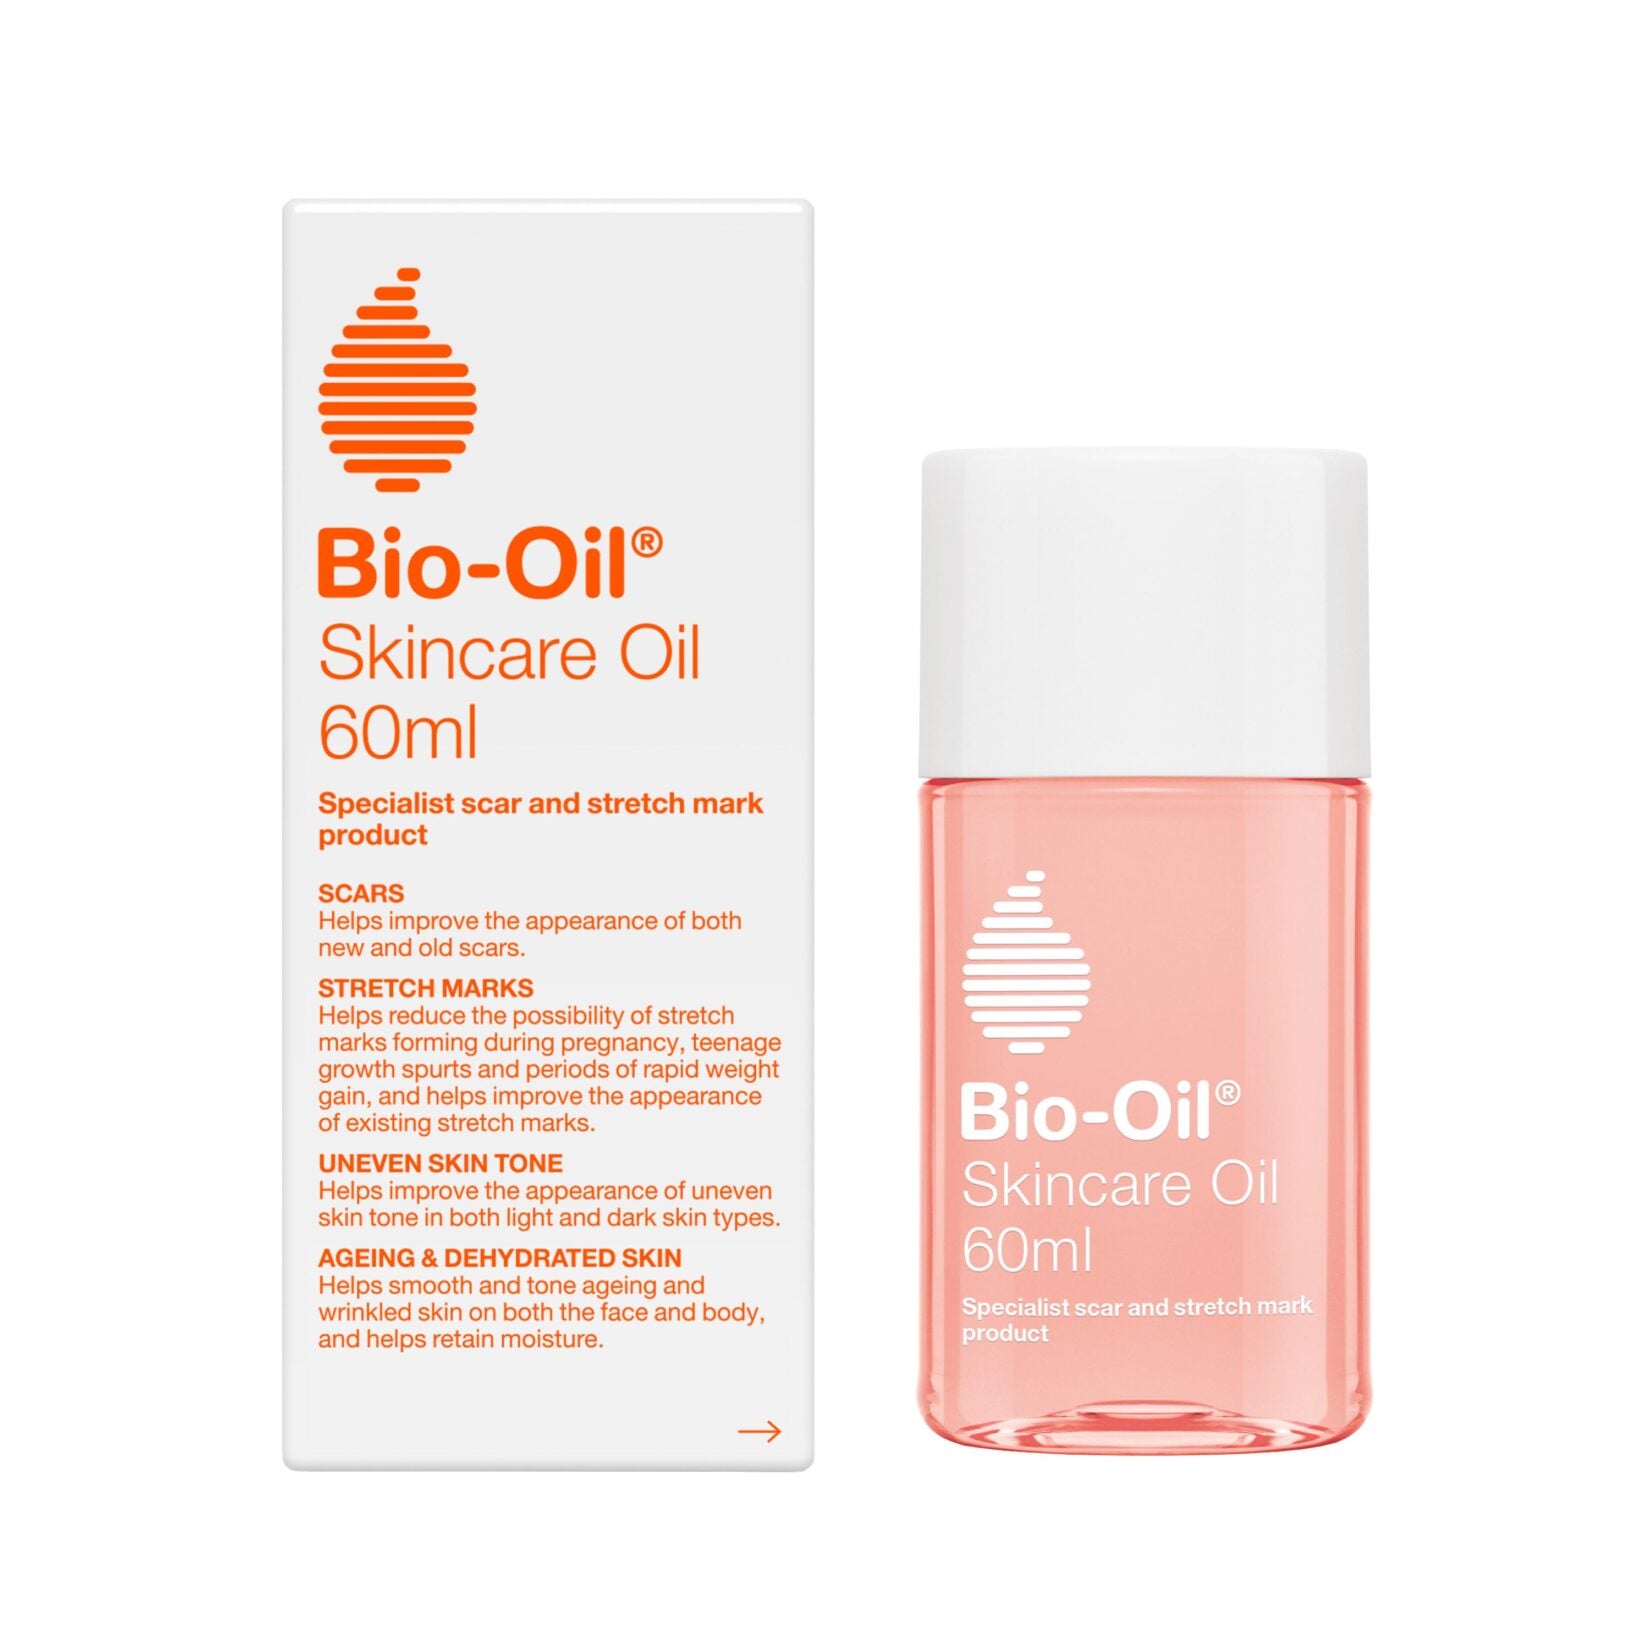 Bio-Oil Malaysia